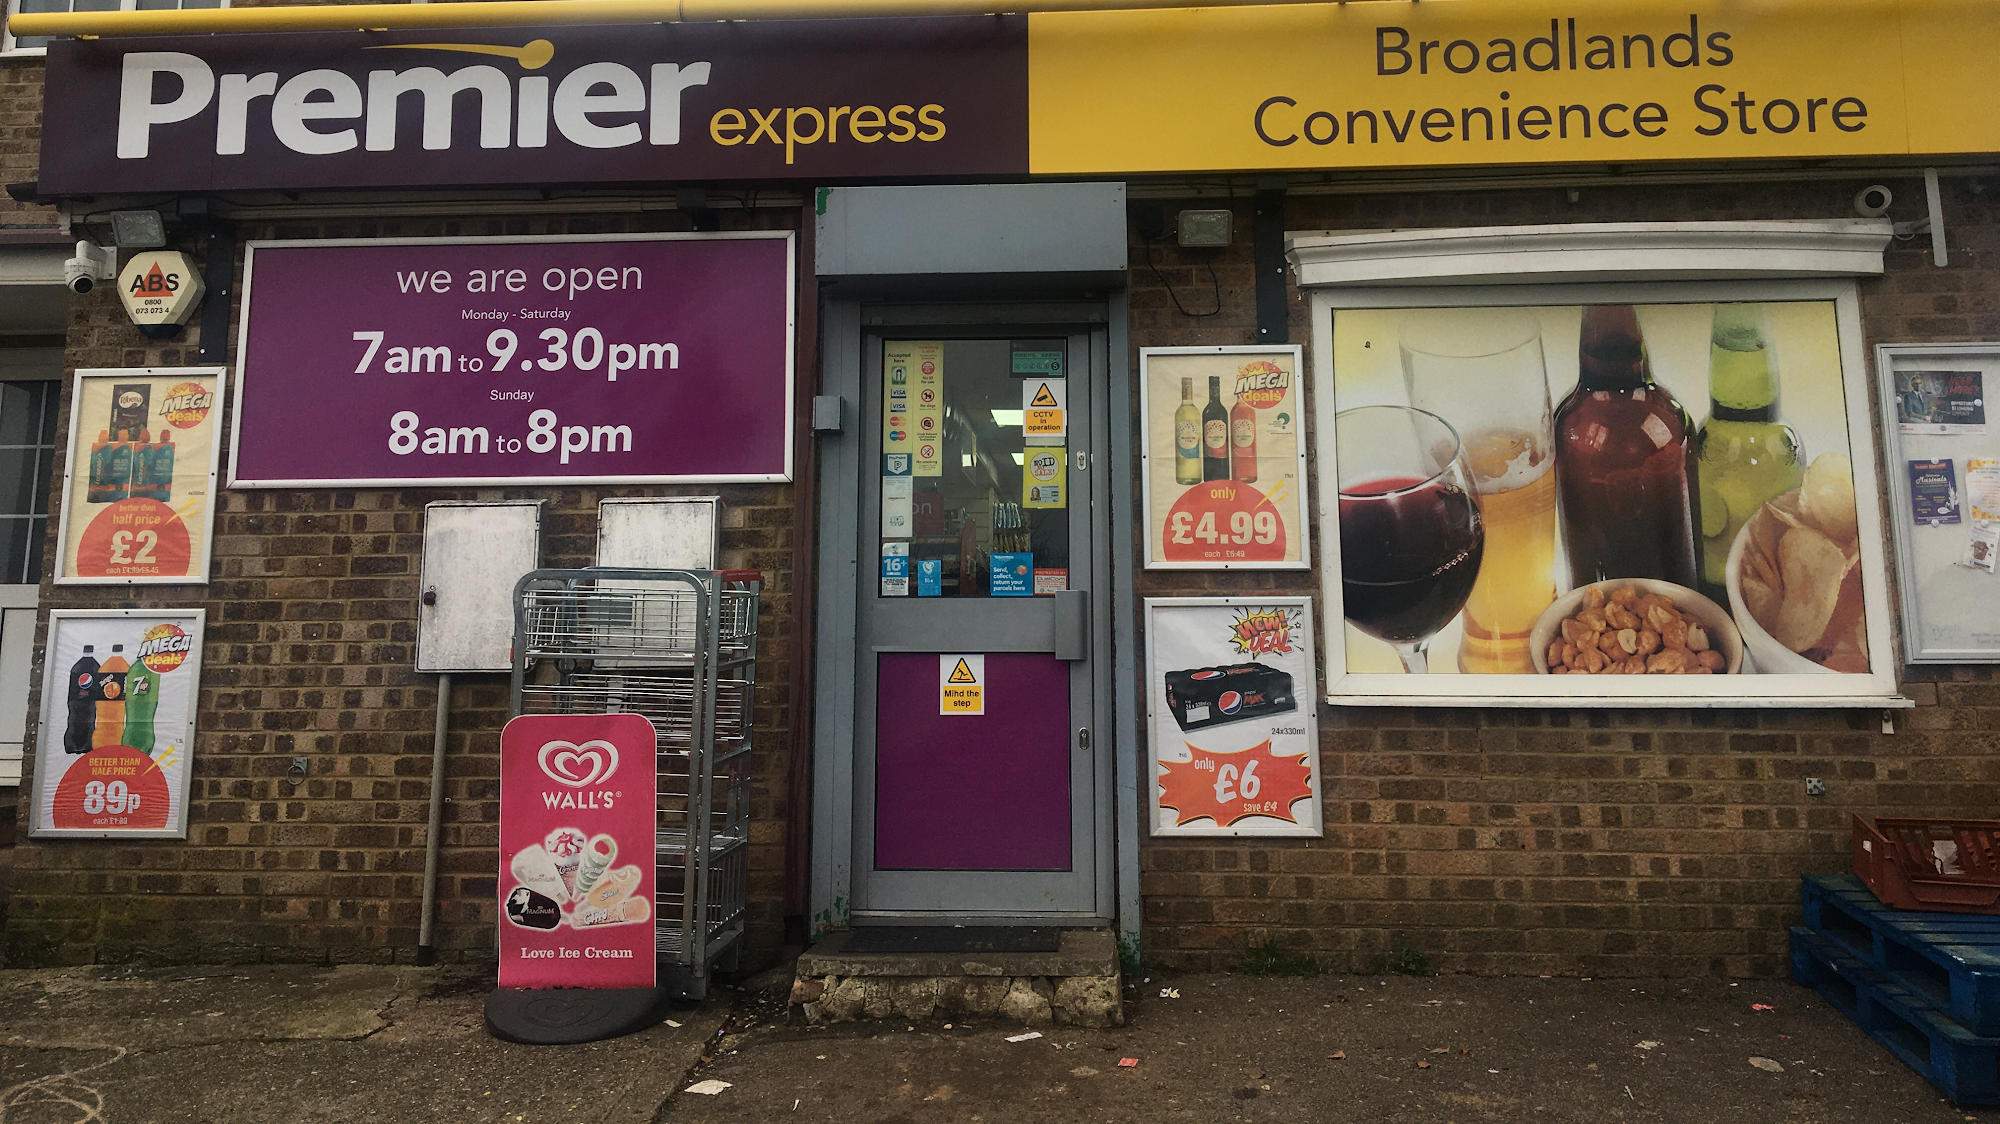 Premier Express - Broadlands Convenience Store